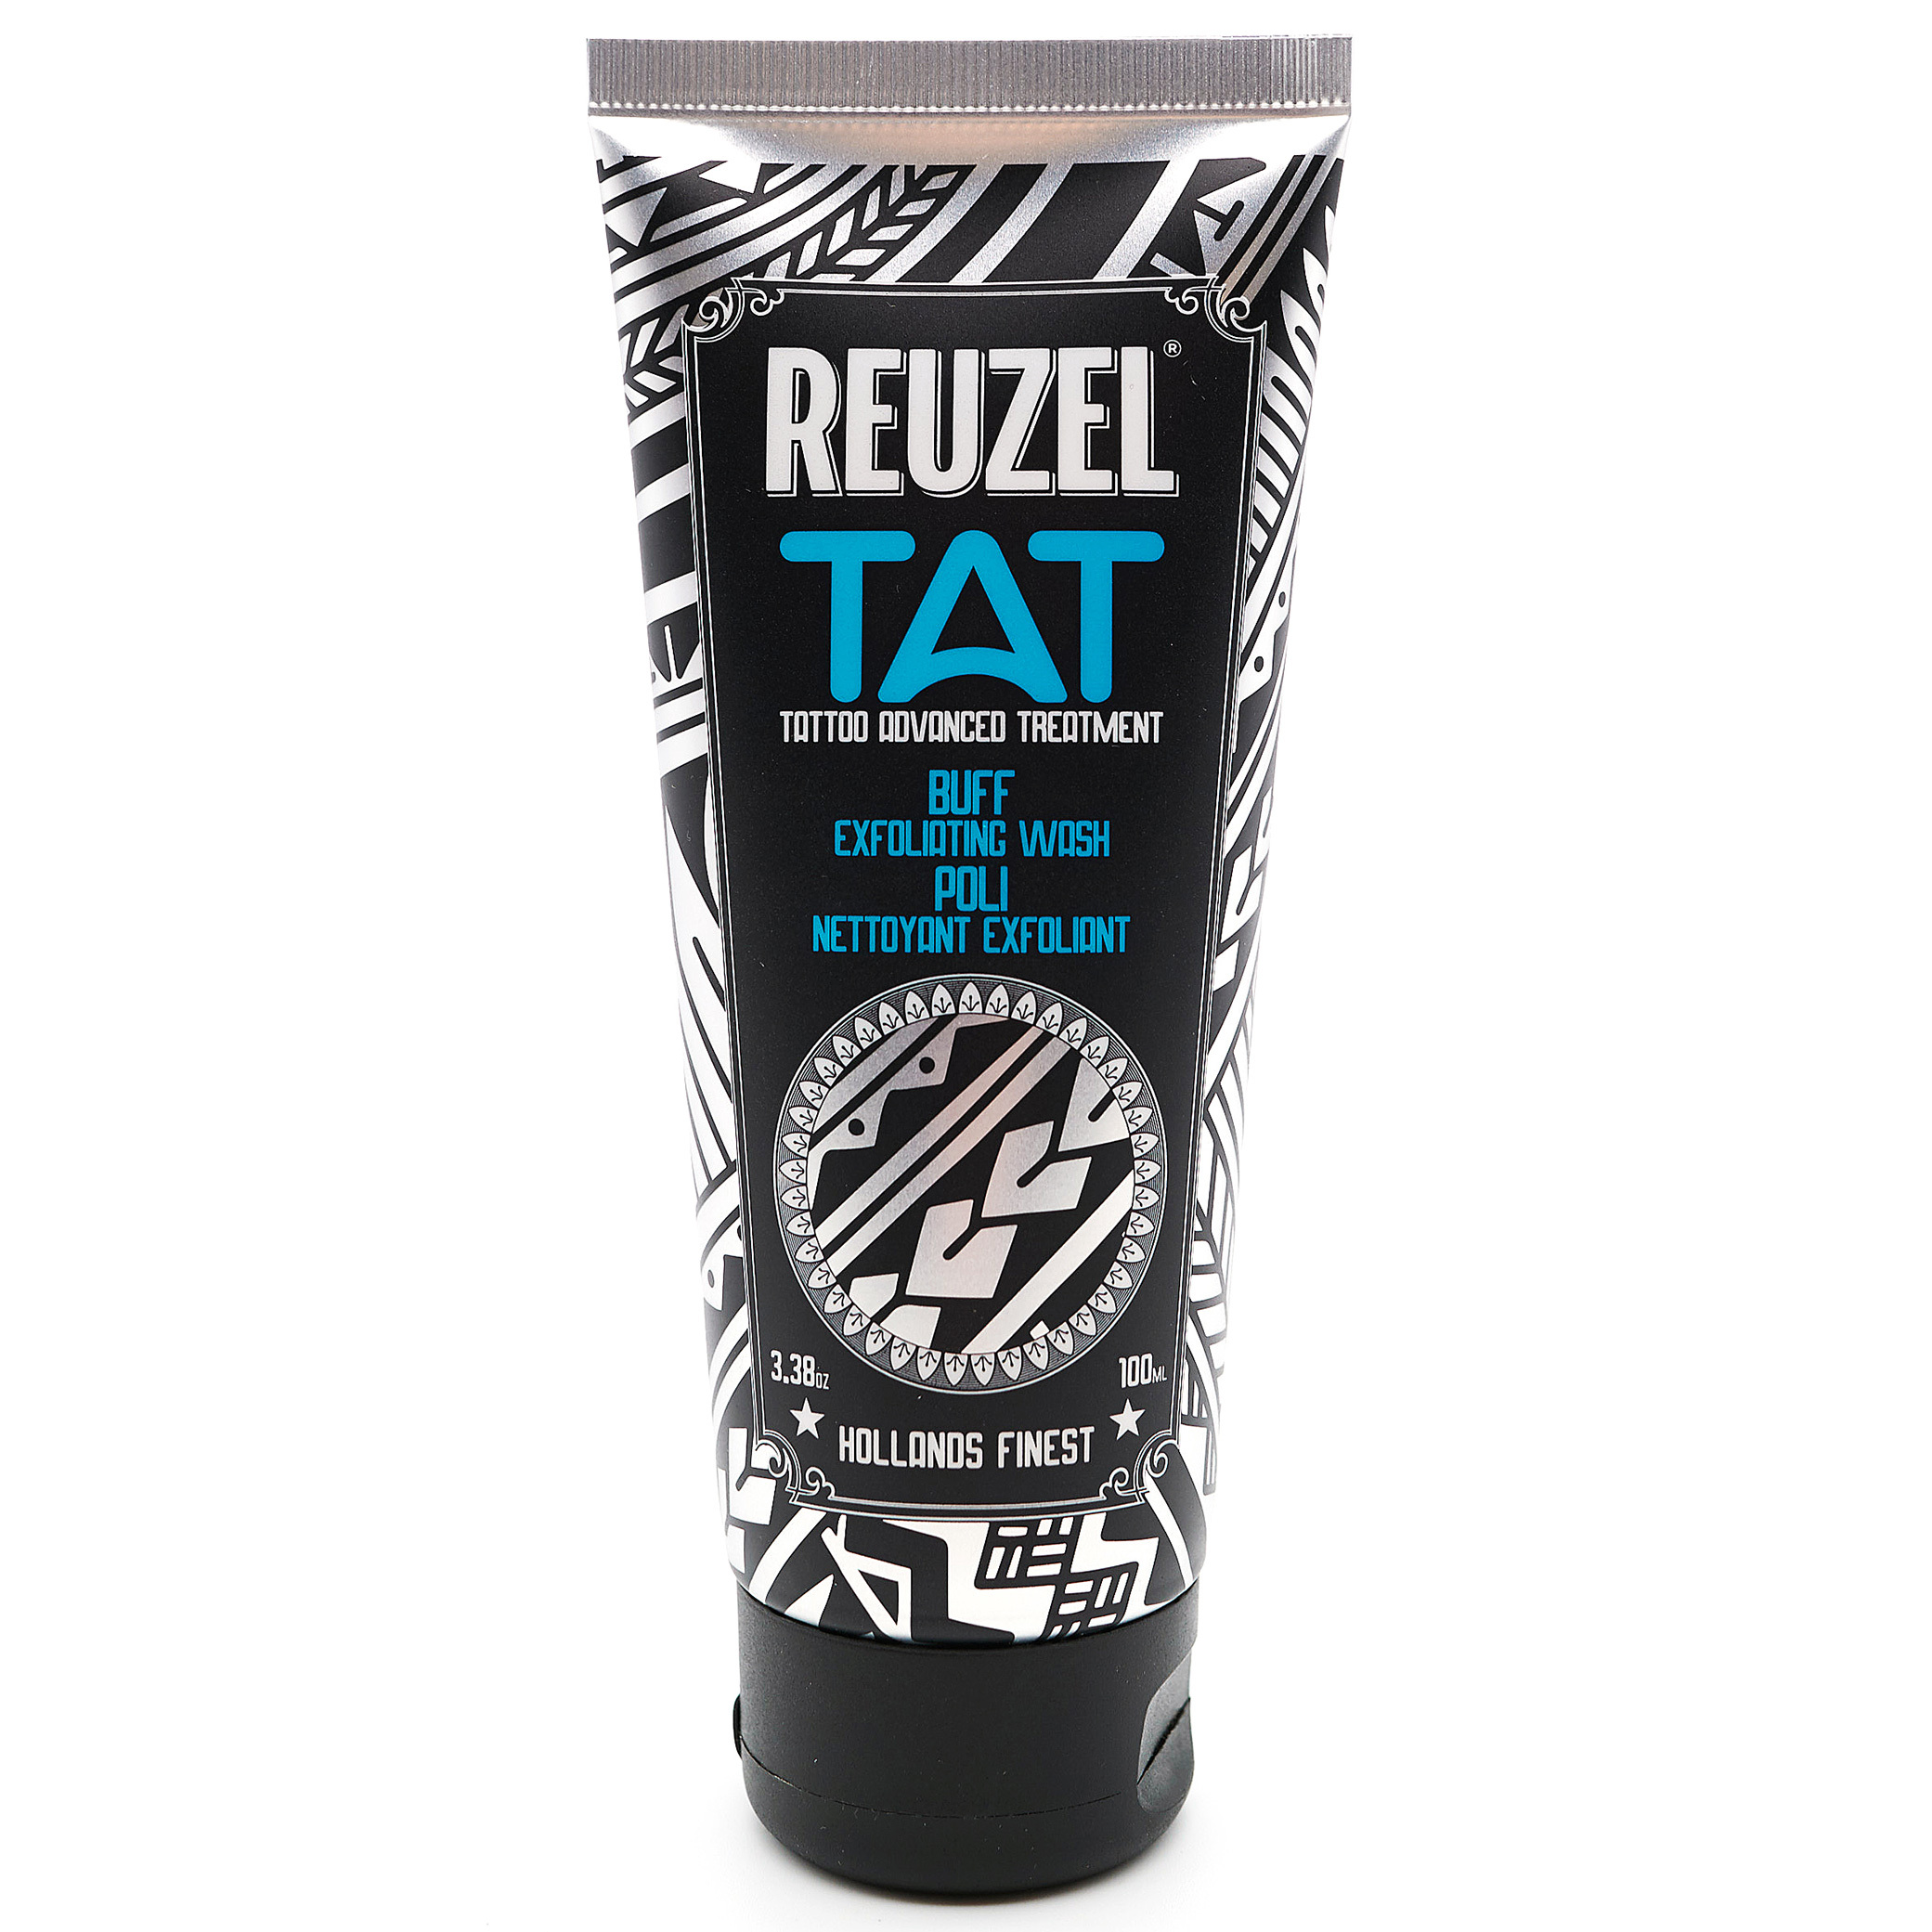 Reuzel Tattoo Care: Step #1 - Buff Exfoliating Wash - 3.38 oz